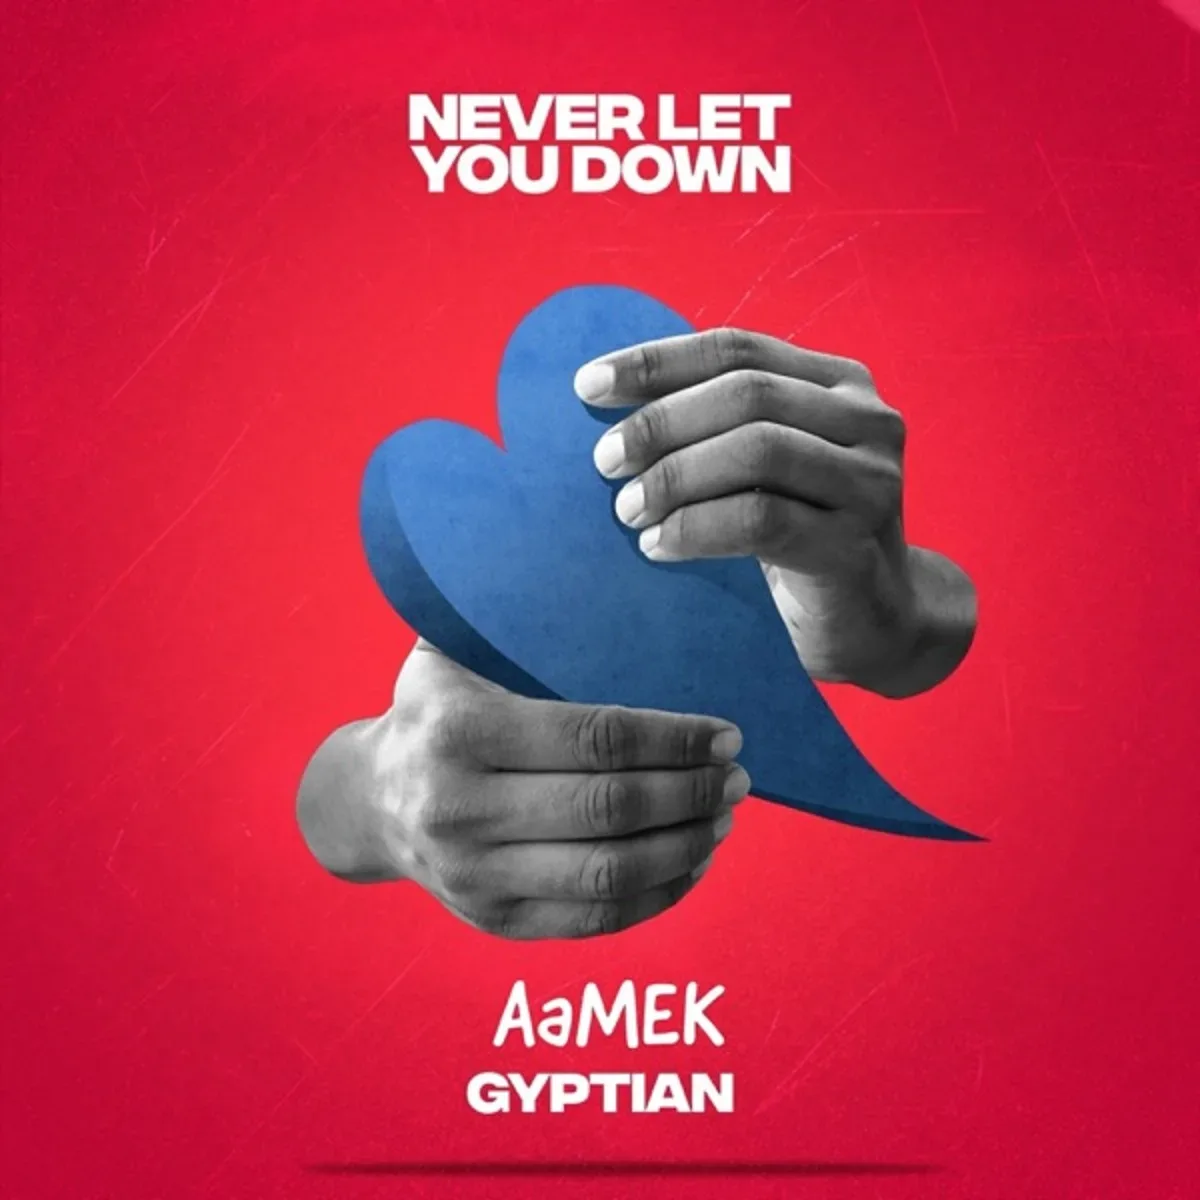 aamek-gyptian-never-let-you-down-jpg